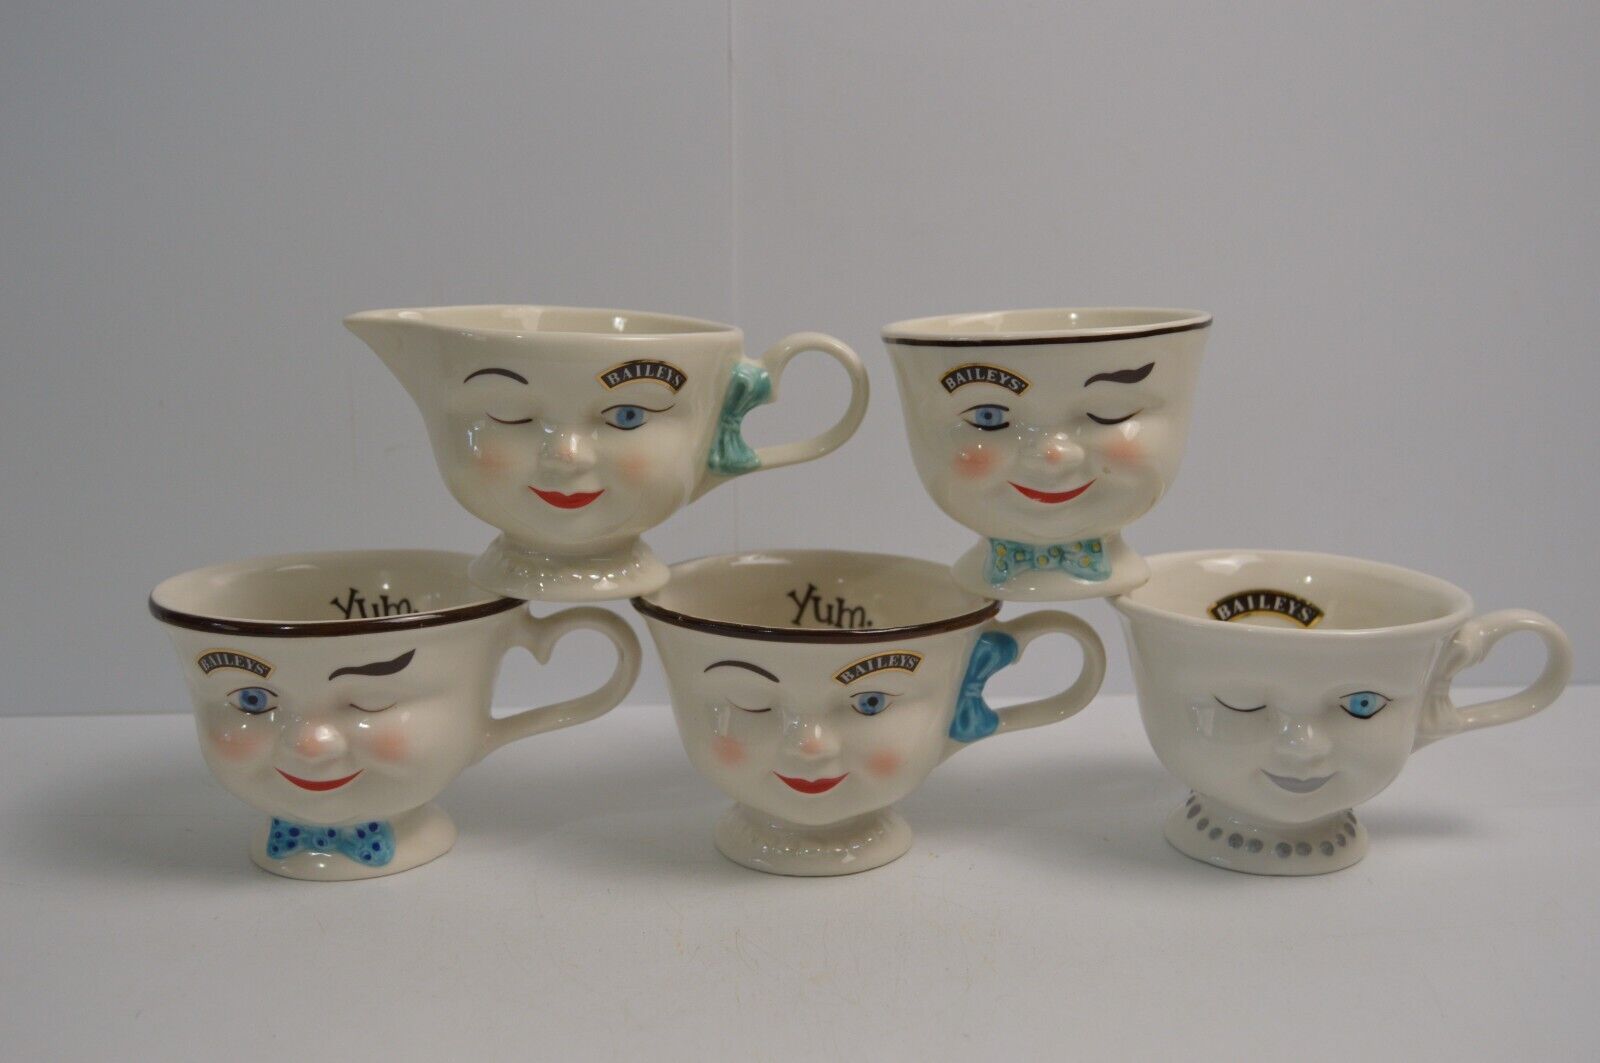 5 Baileys Irish Cream Winking Mugs Coffee Cups Collectible 1996 Barware